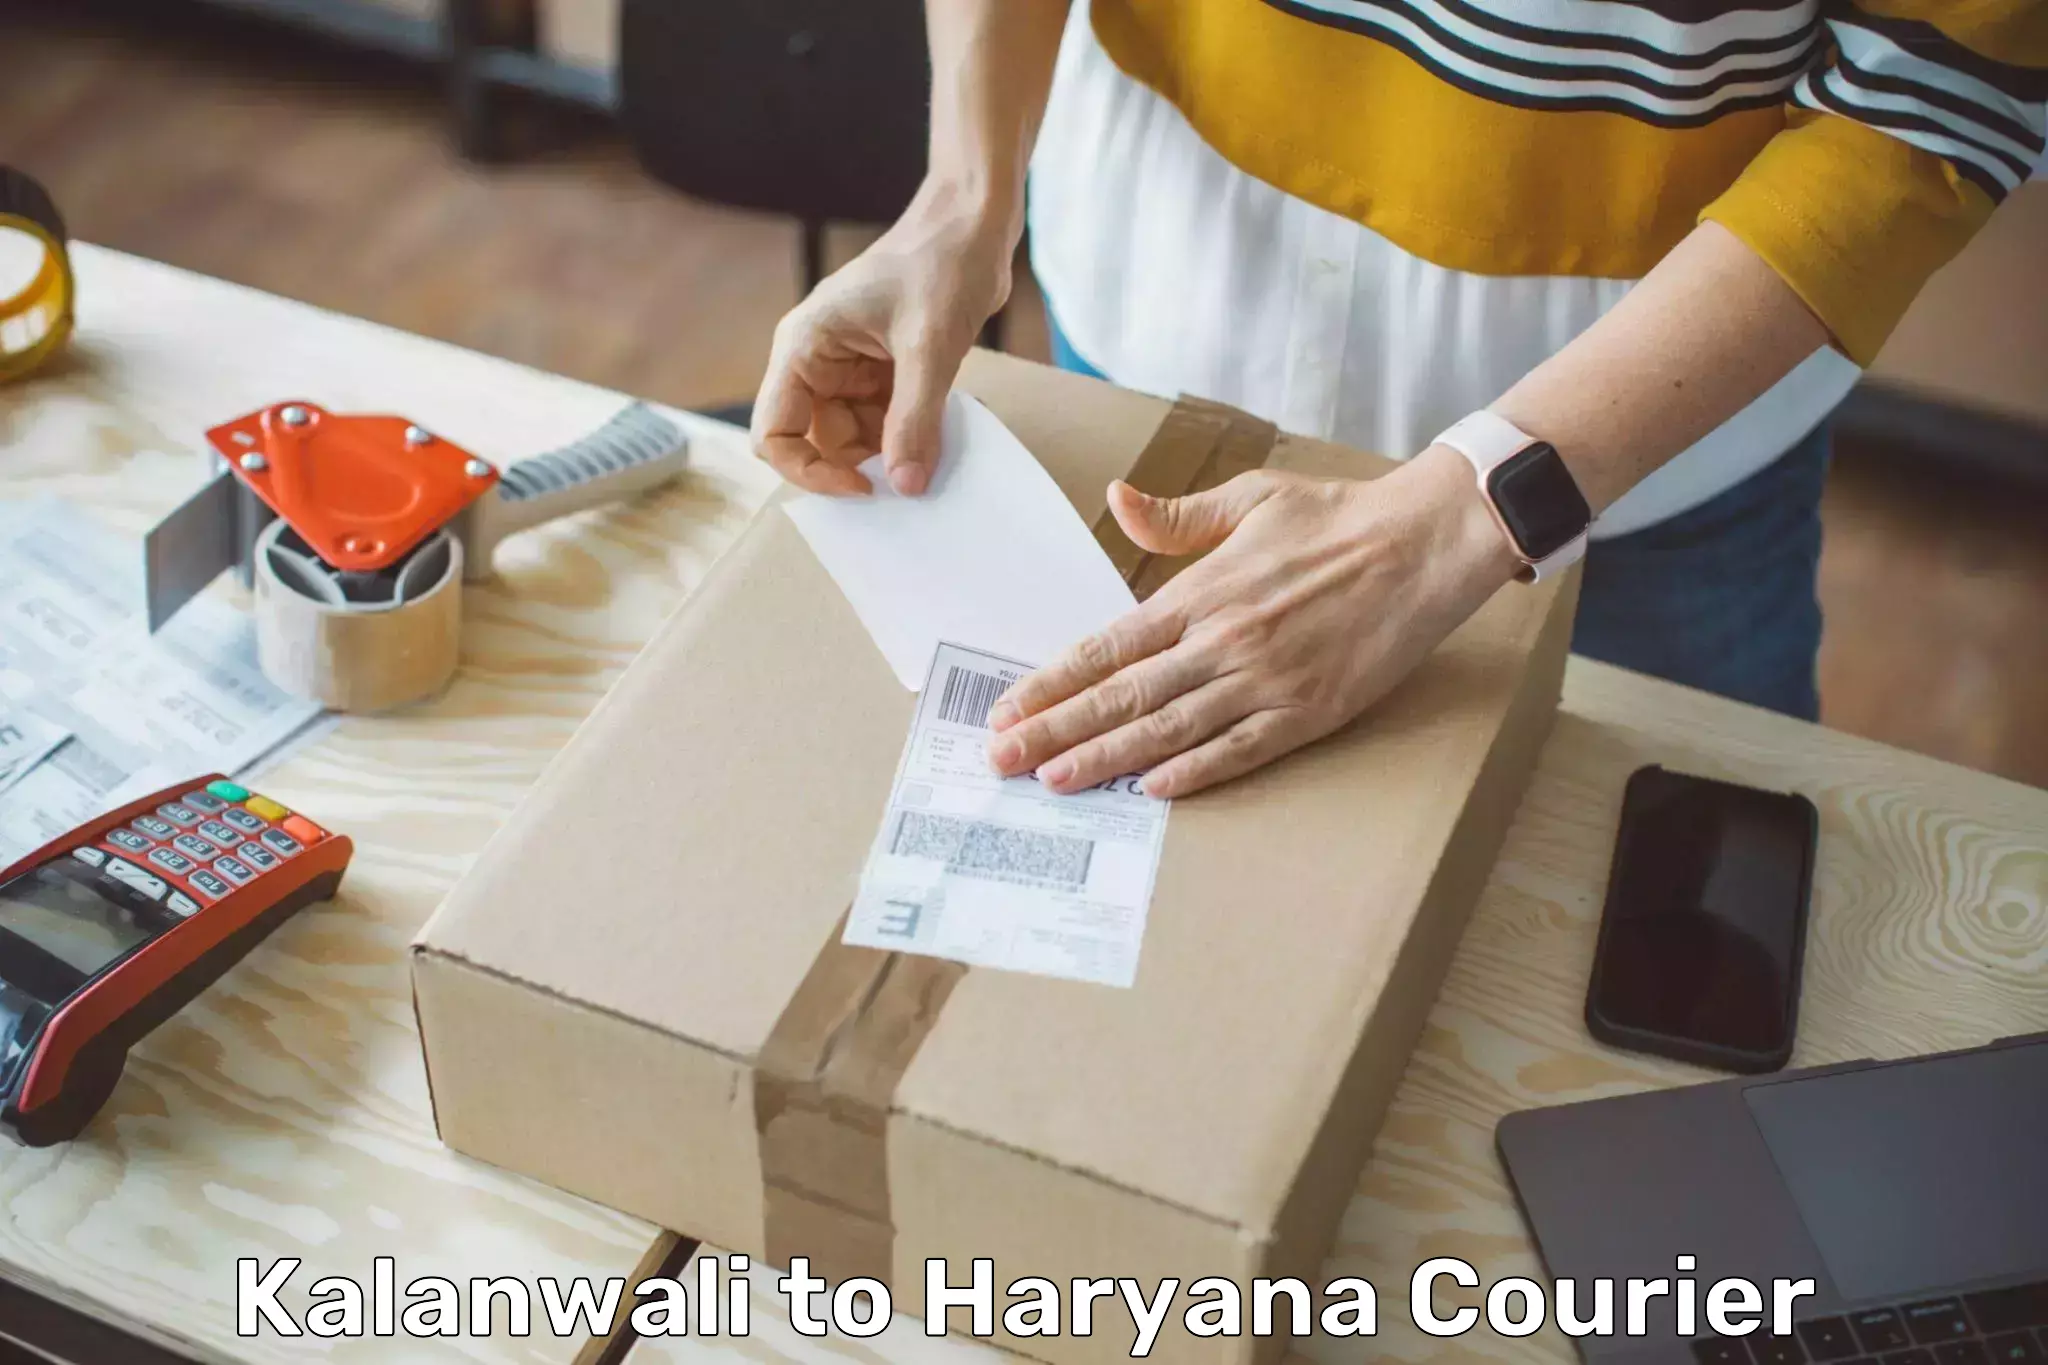 24-hour courier service Kalanwali to NCR Haryana